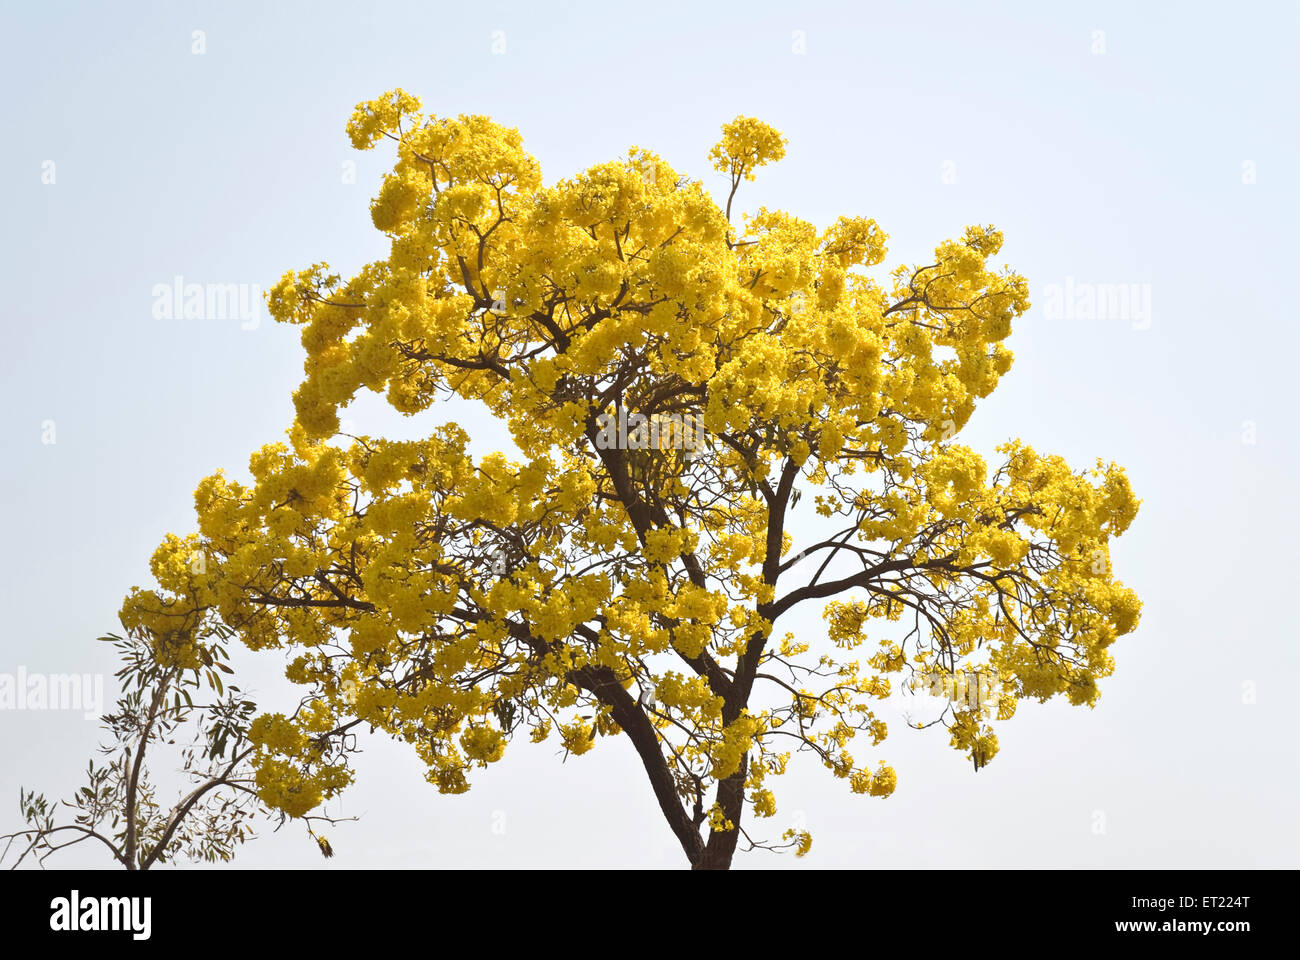 Flowering tree with yellow flowers ; Poona ; Pune ; Maharashtra ; India ; Asia Stock Photo